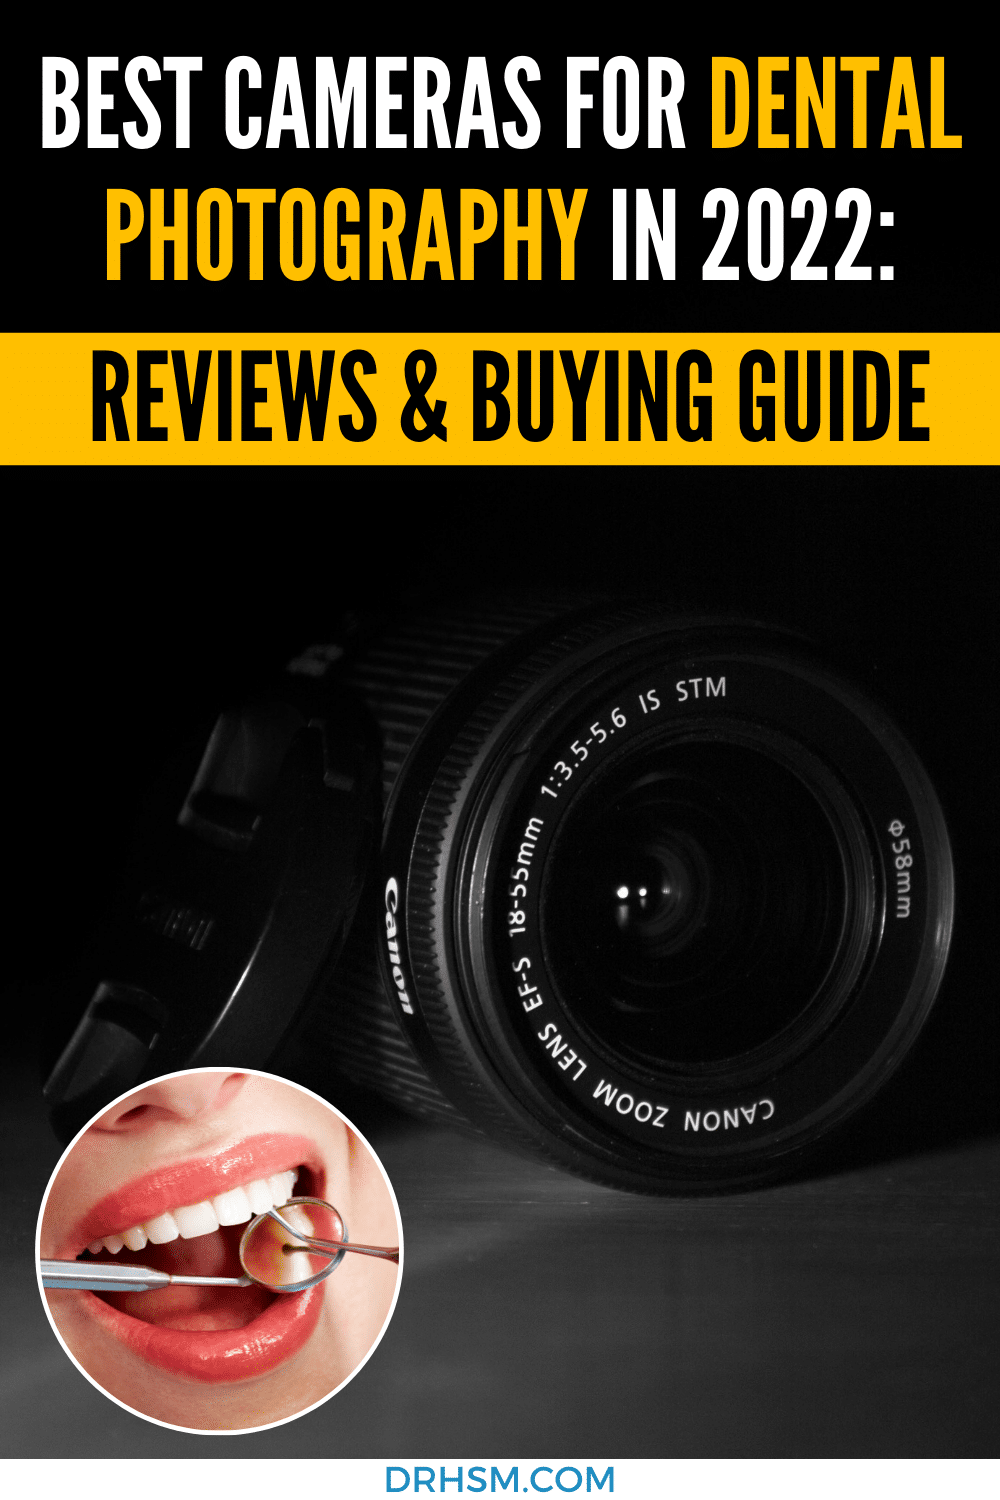 Best cameras for dental photography